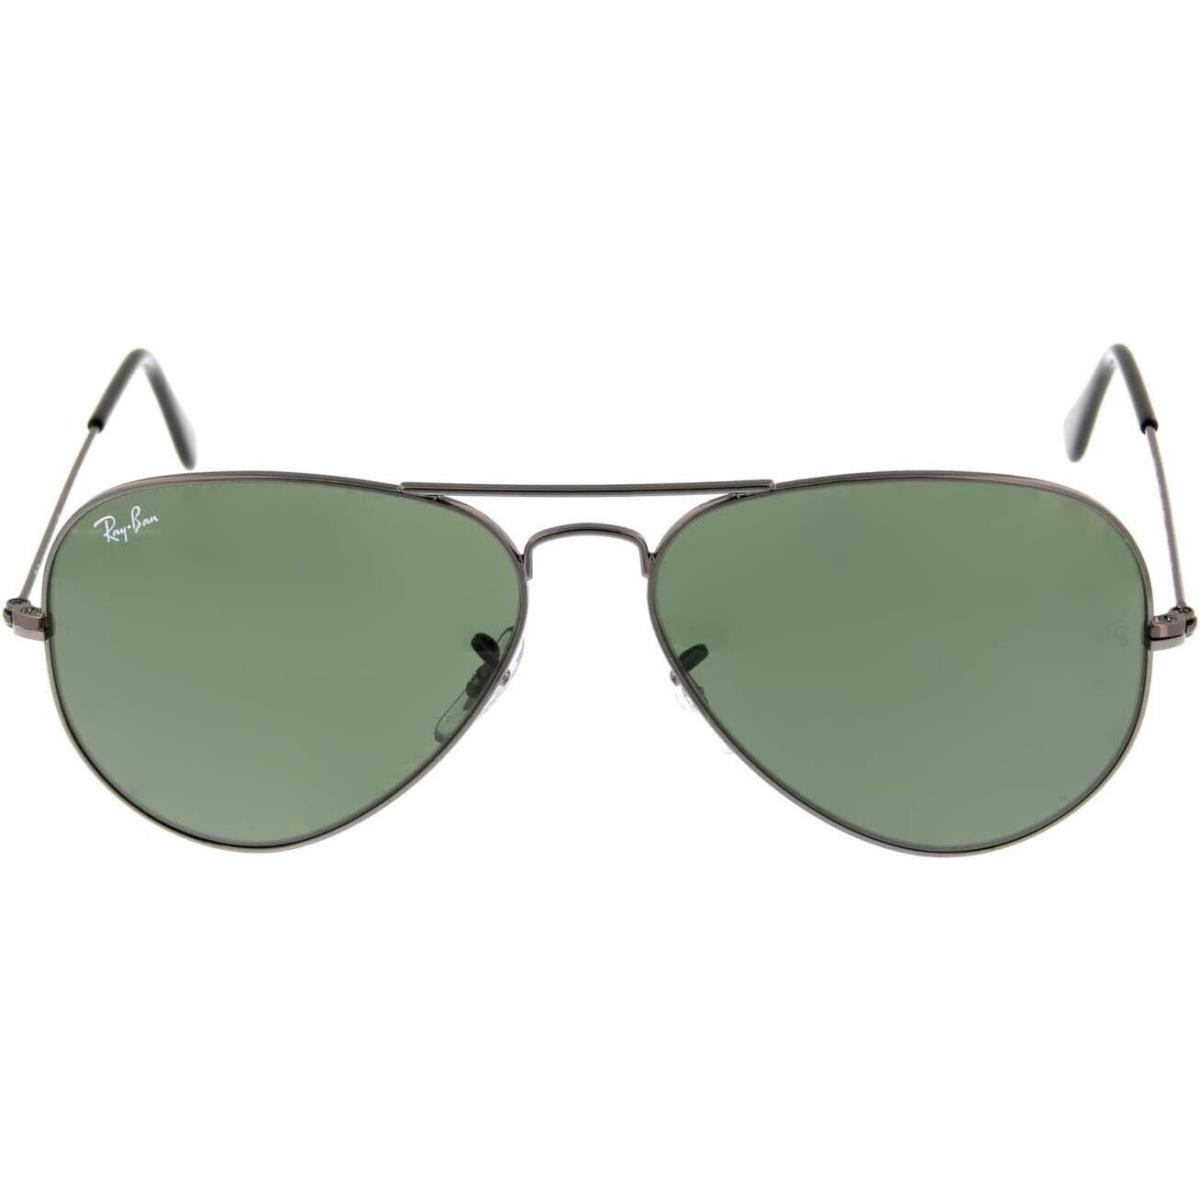 Ray-ban RB3025 Aviator Classic Green Classic G-15 Unisex Sunglasses - Frame: , Lens: Green